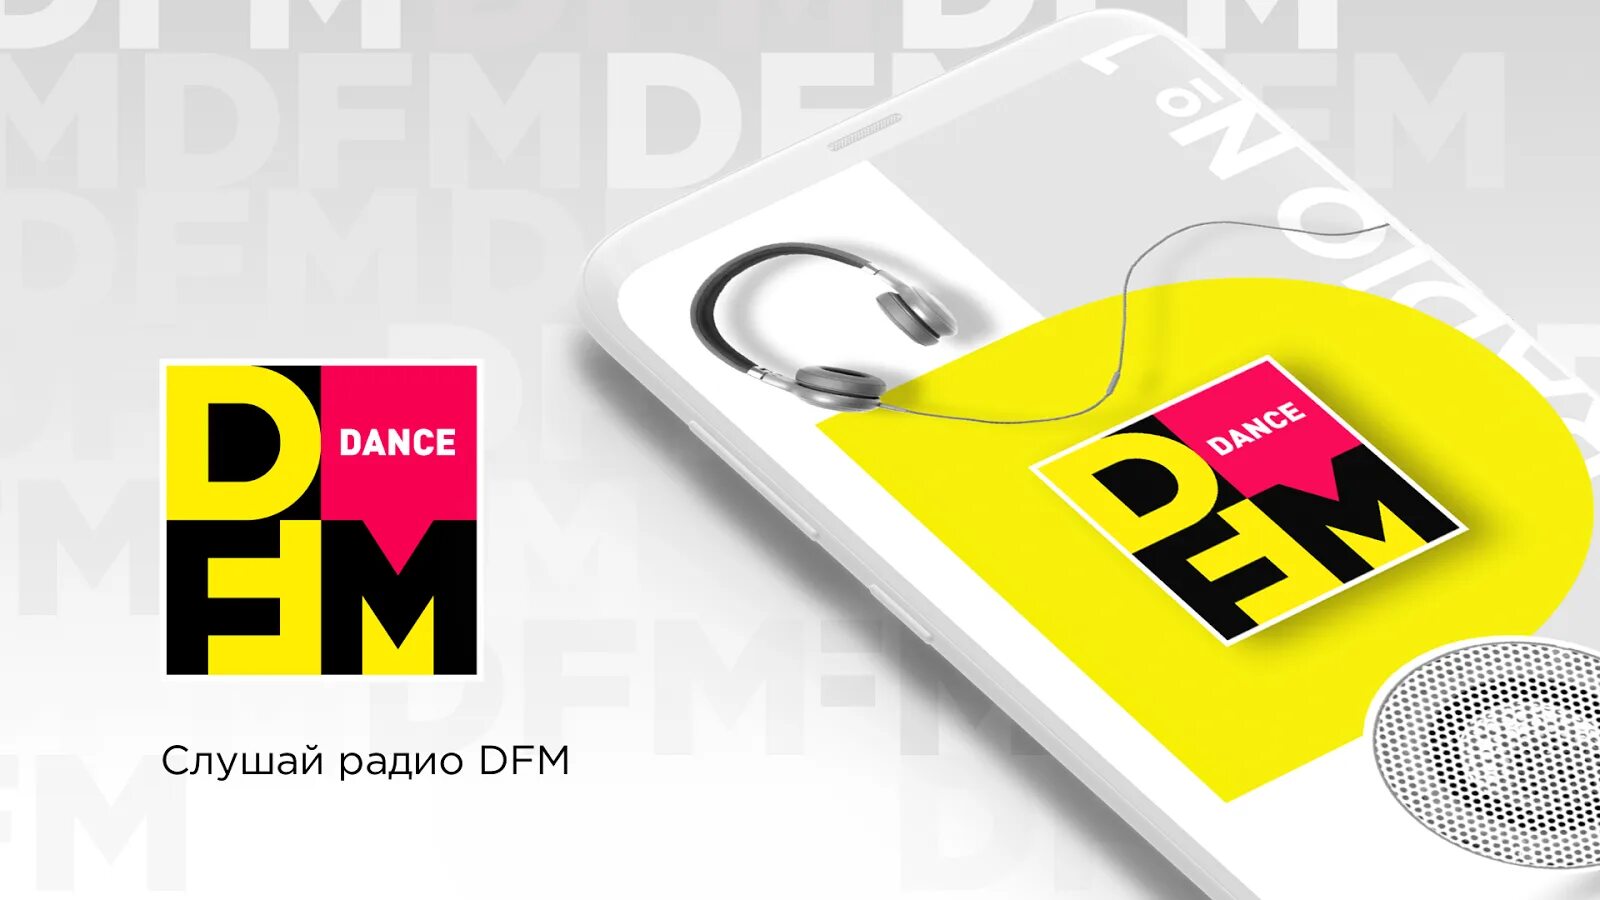 DFM. DFM радио. Сайт радиостанции DFM. Логотип ди ФМ. Бест ди фм радио